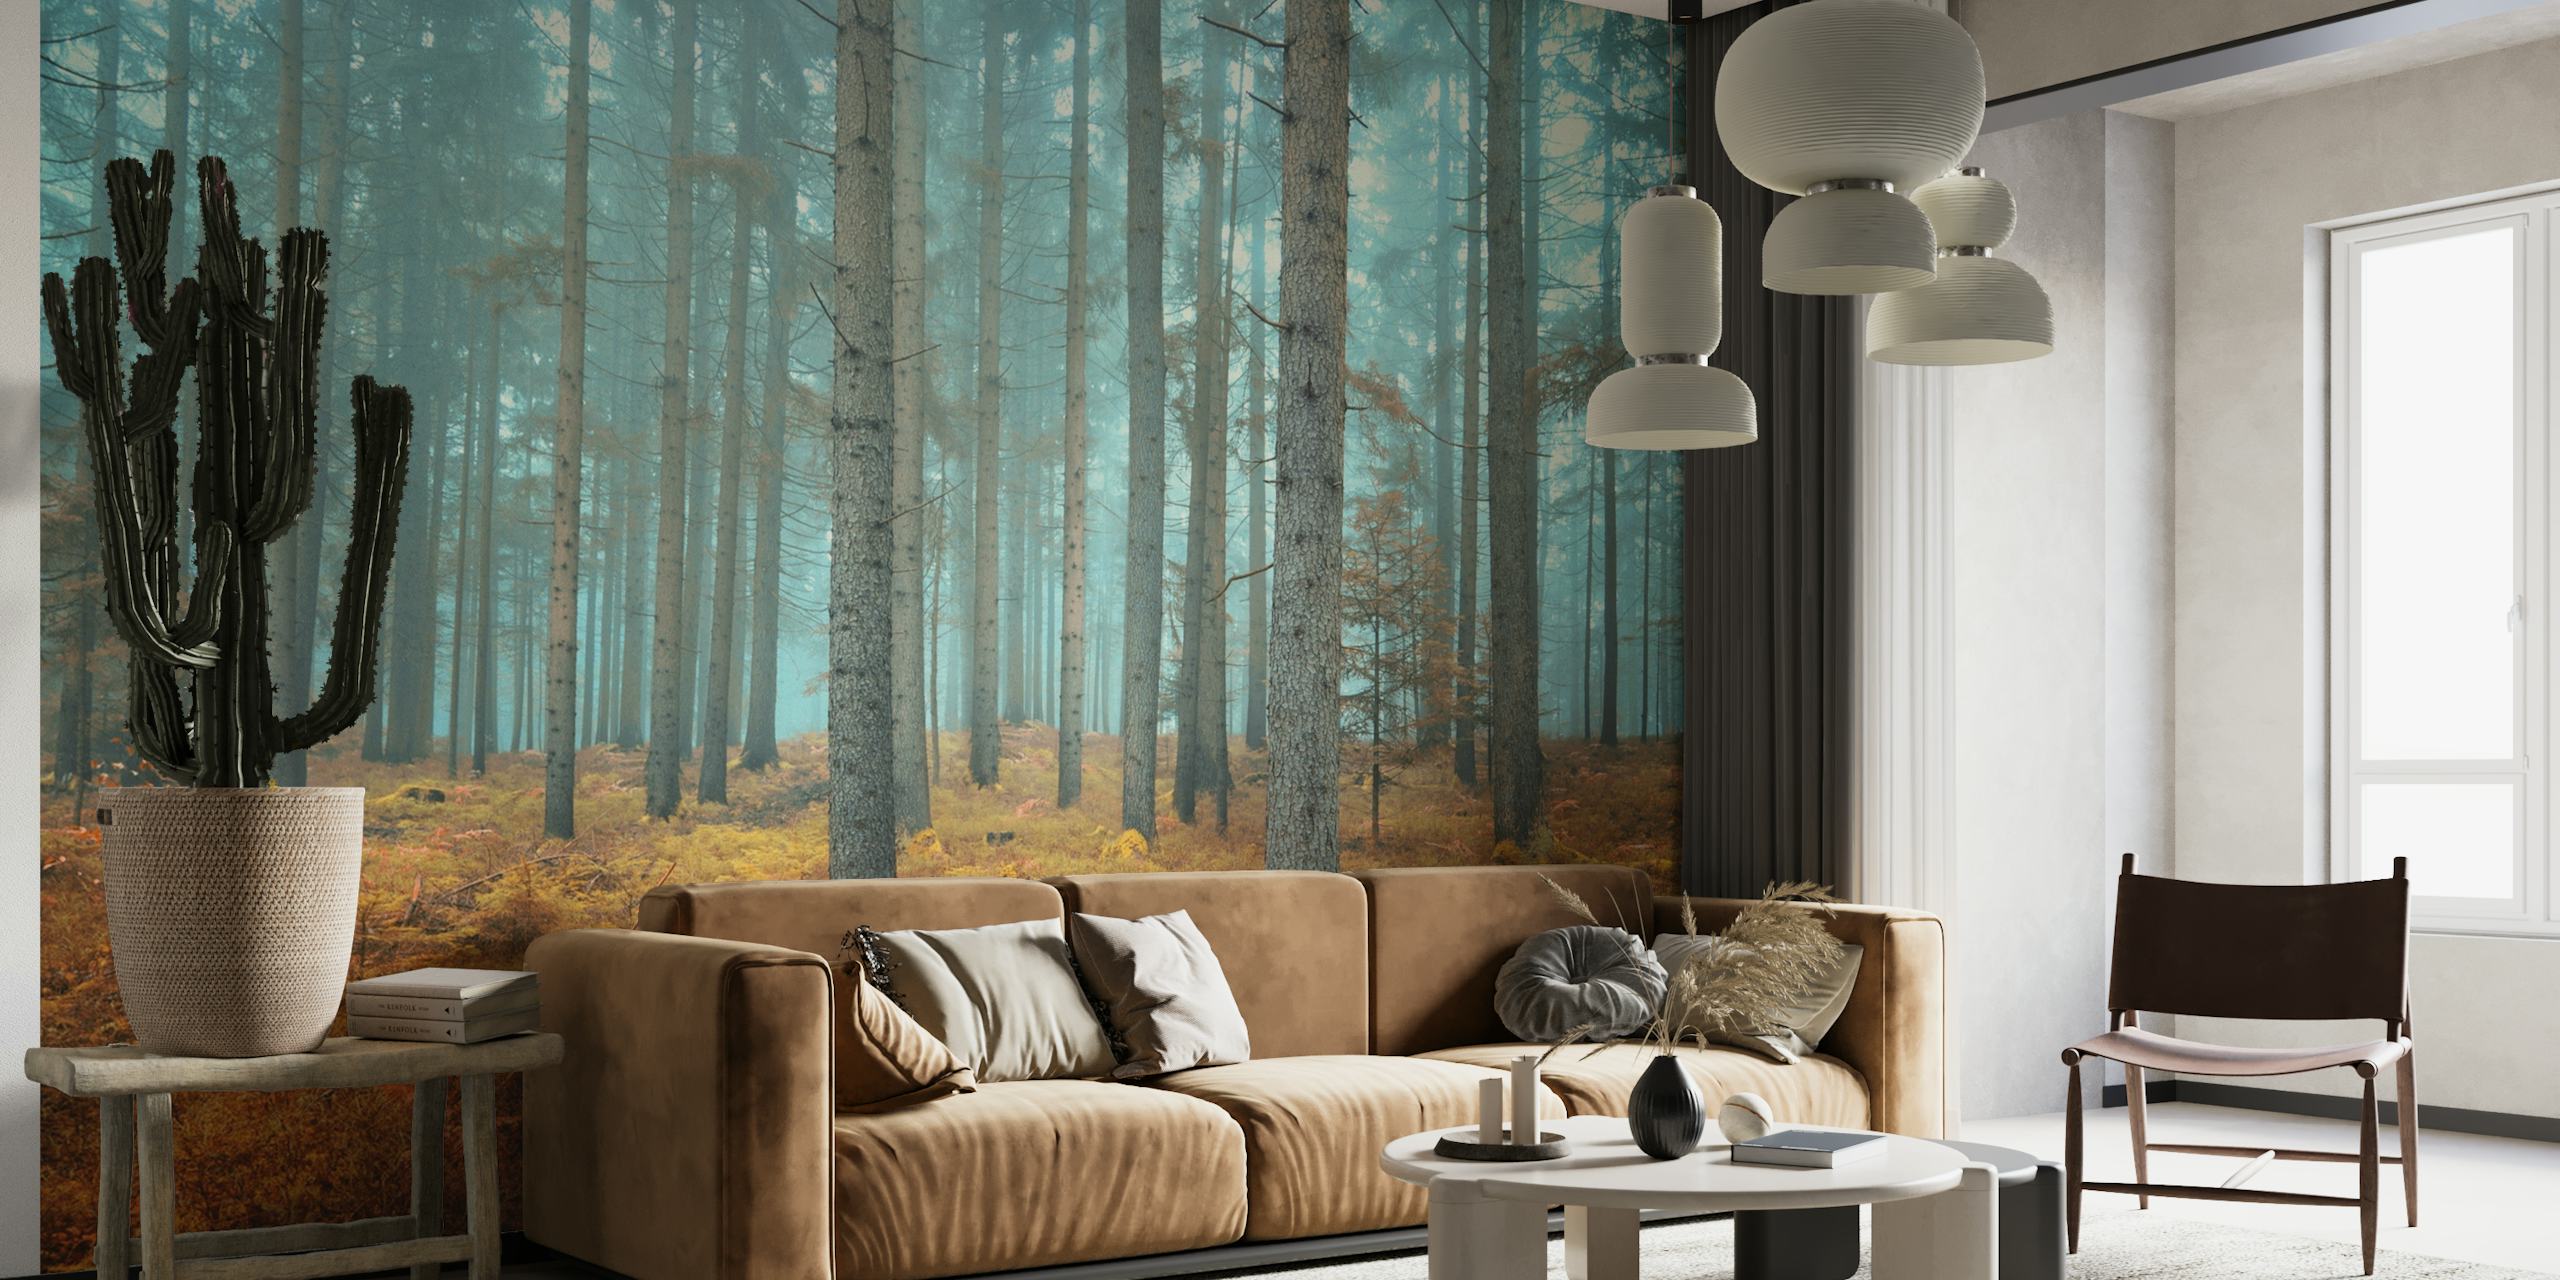 Dreamy forest wallpaper